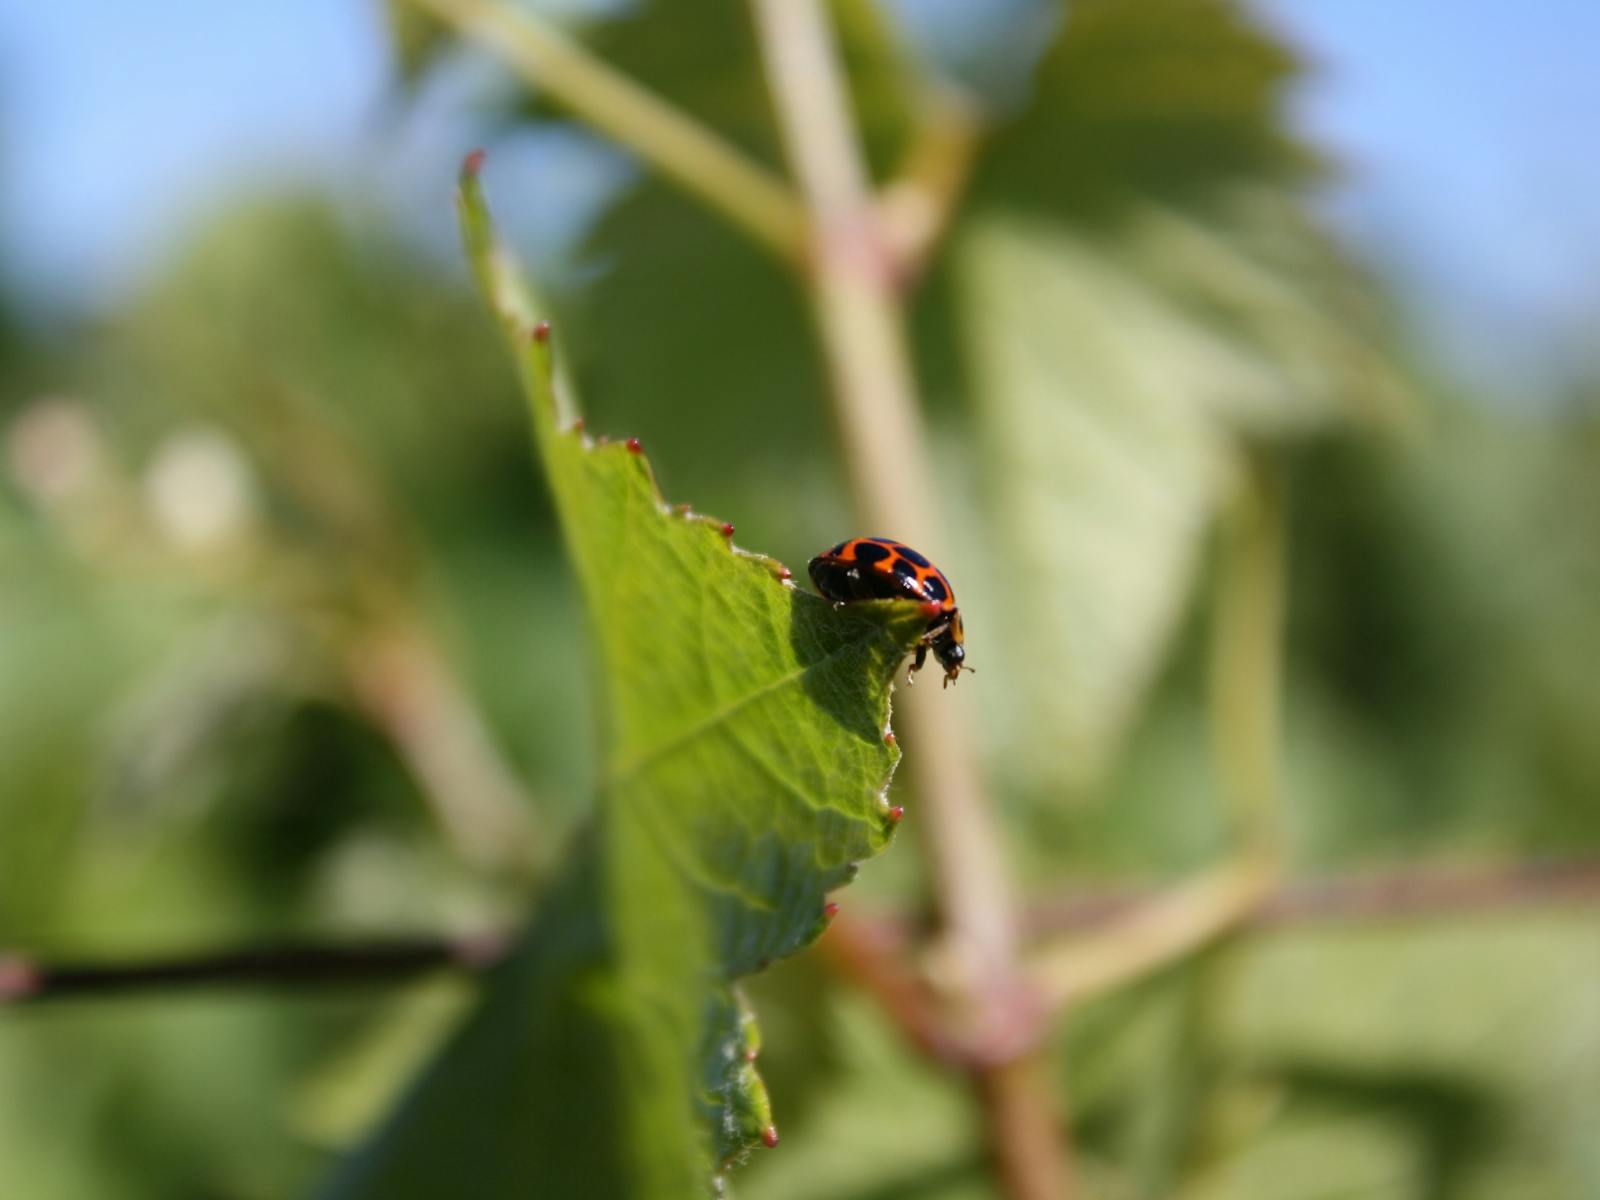 A ladybird in Vineyard 1 North